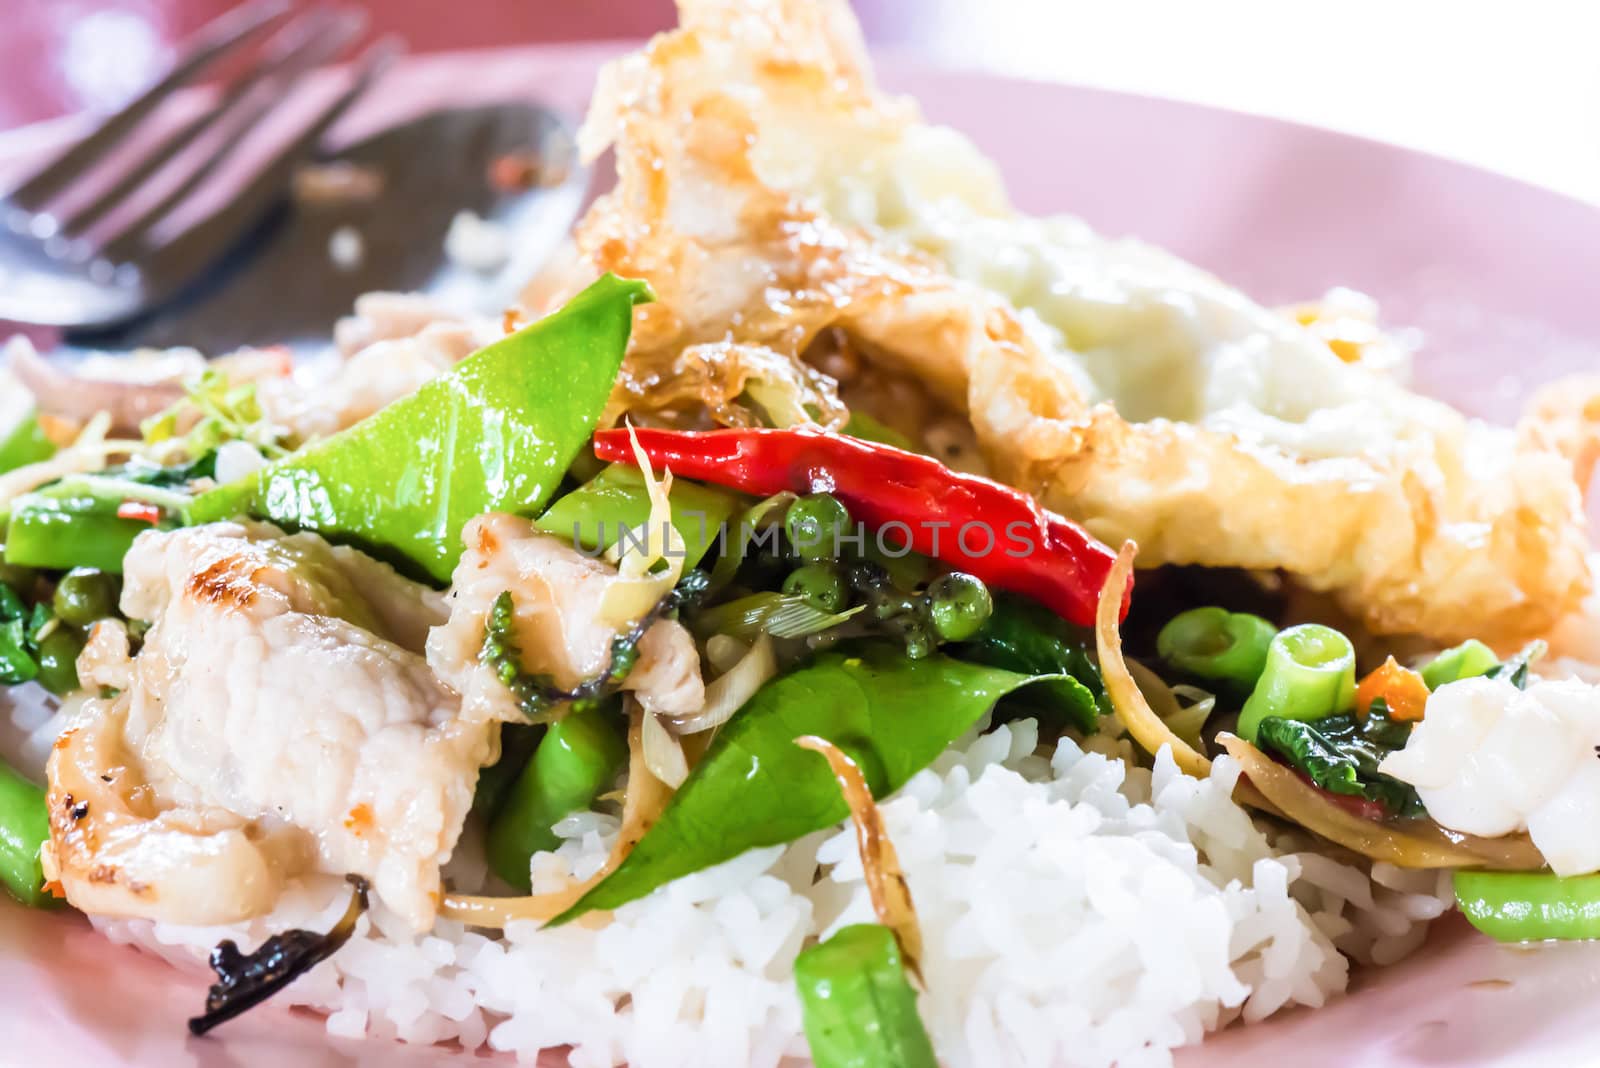 thai cuisine, basil fried rice and fried egg. by wmitrmatr